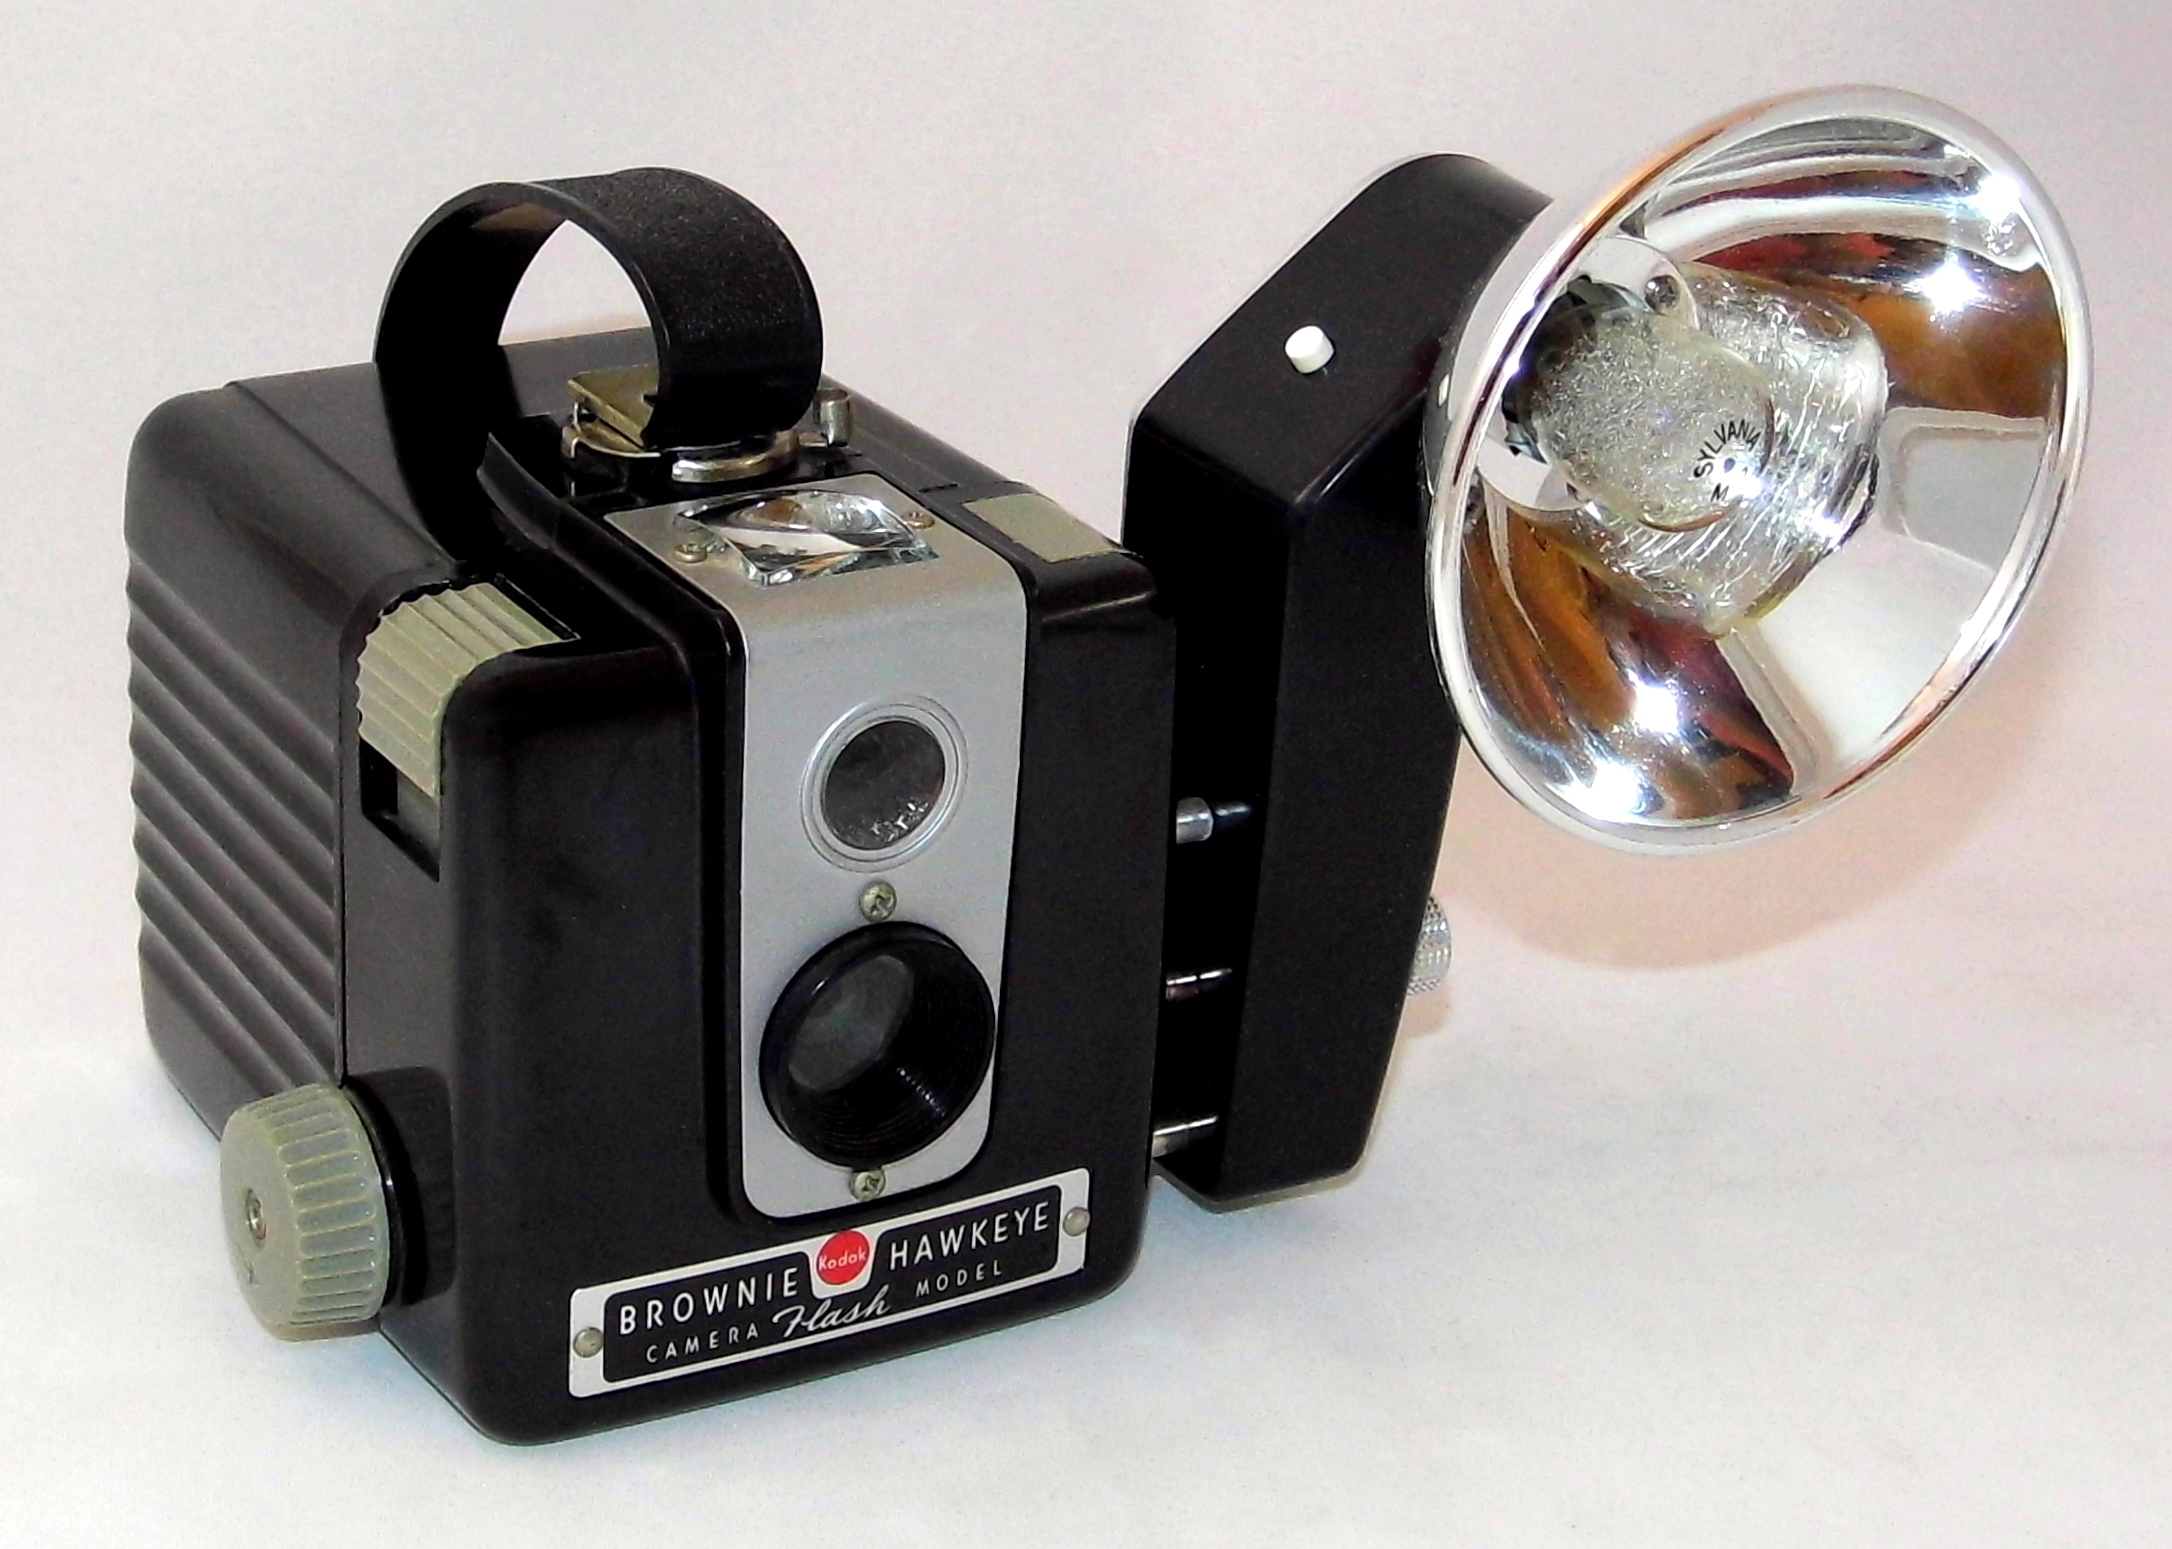 File:Vintage Kodak Brownie Hawkeye Camera, Flash Model, With Kodak